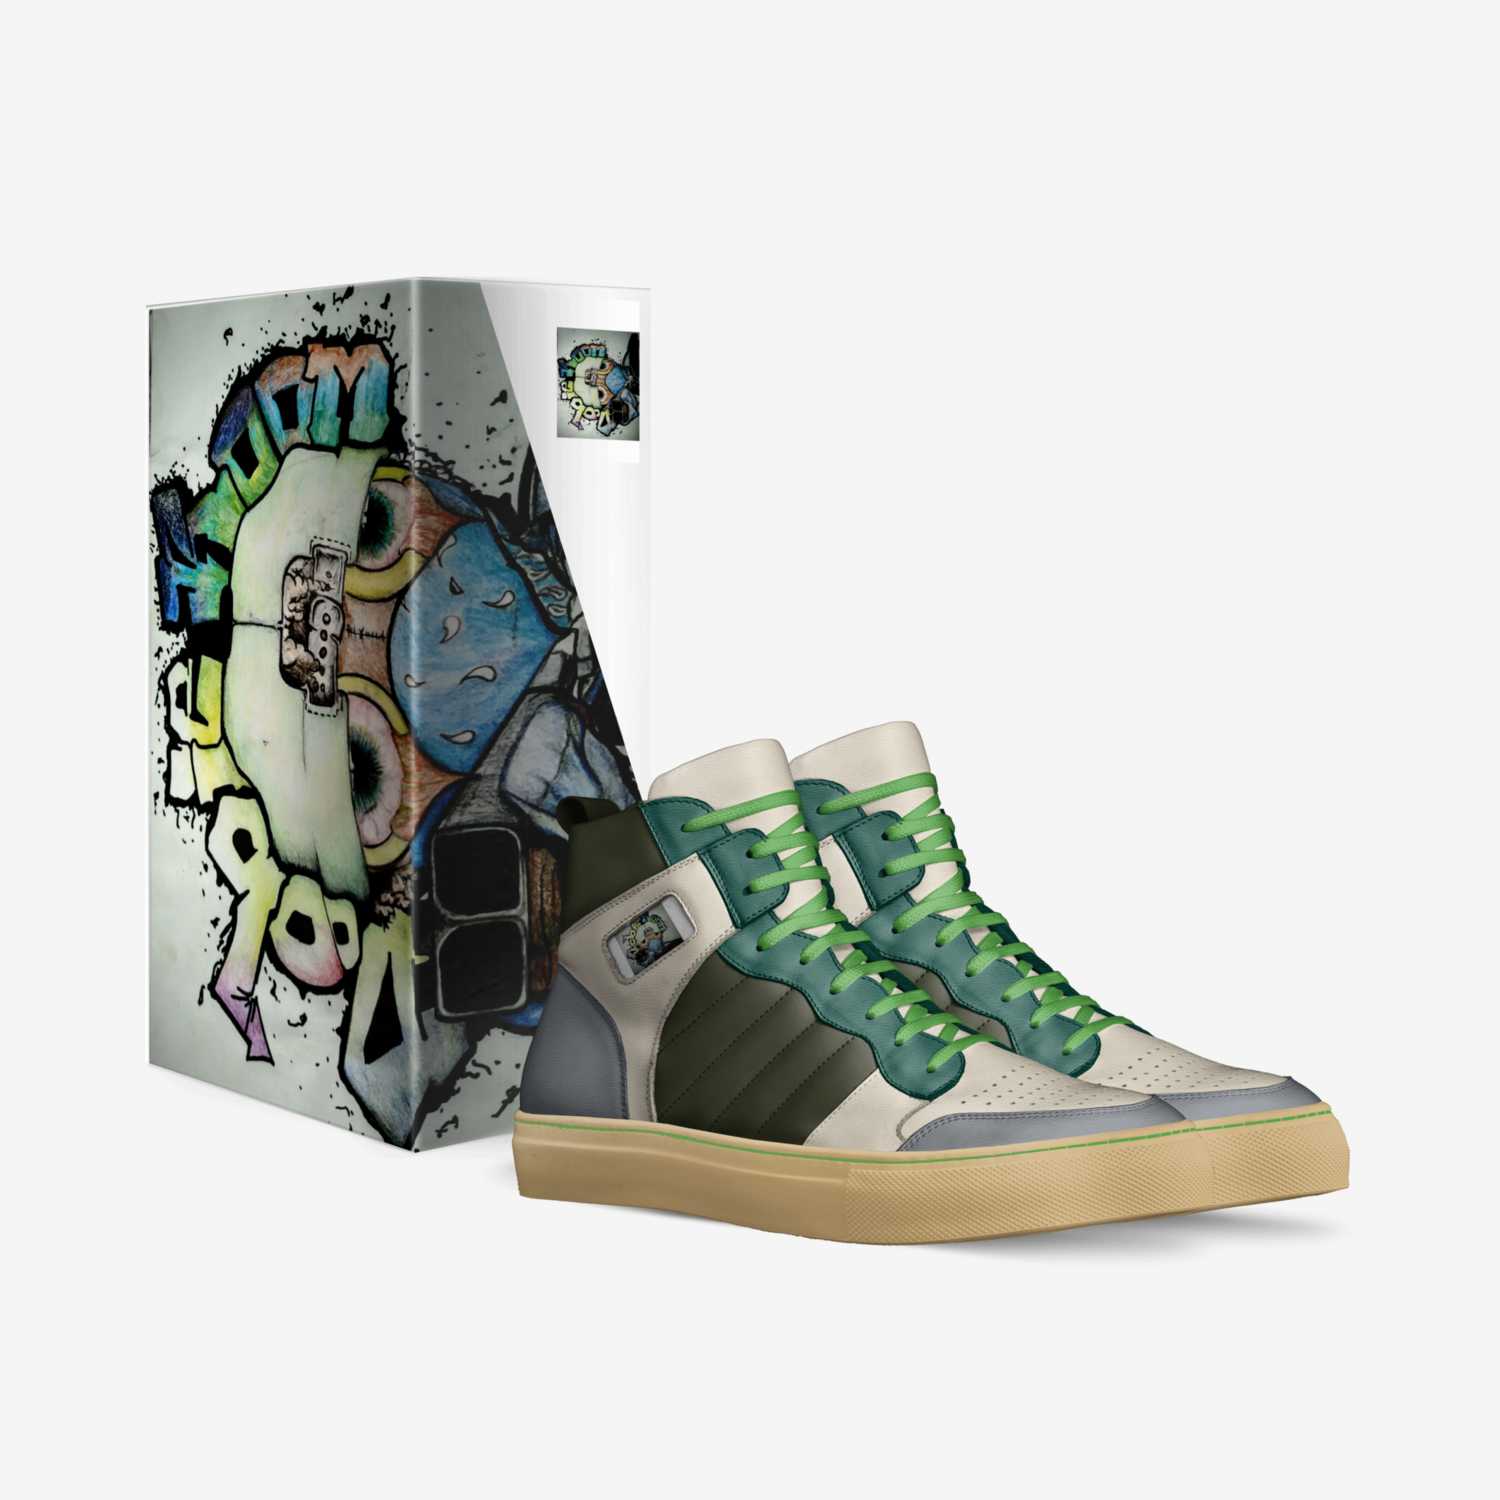 DoobieRoomStudios  custom made in Italy shoes by Doobie Room Studios | Box view